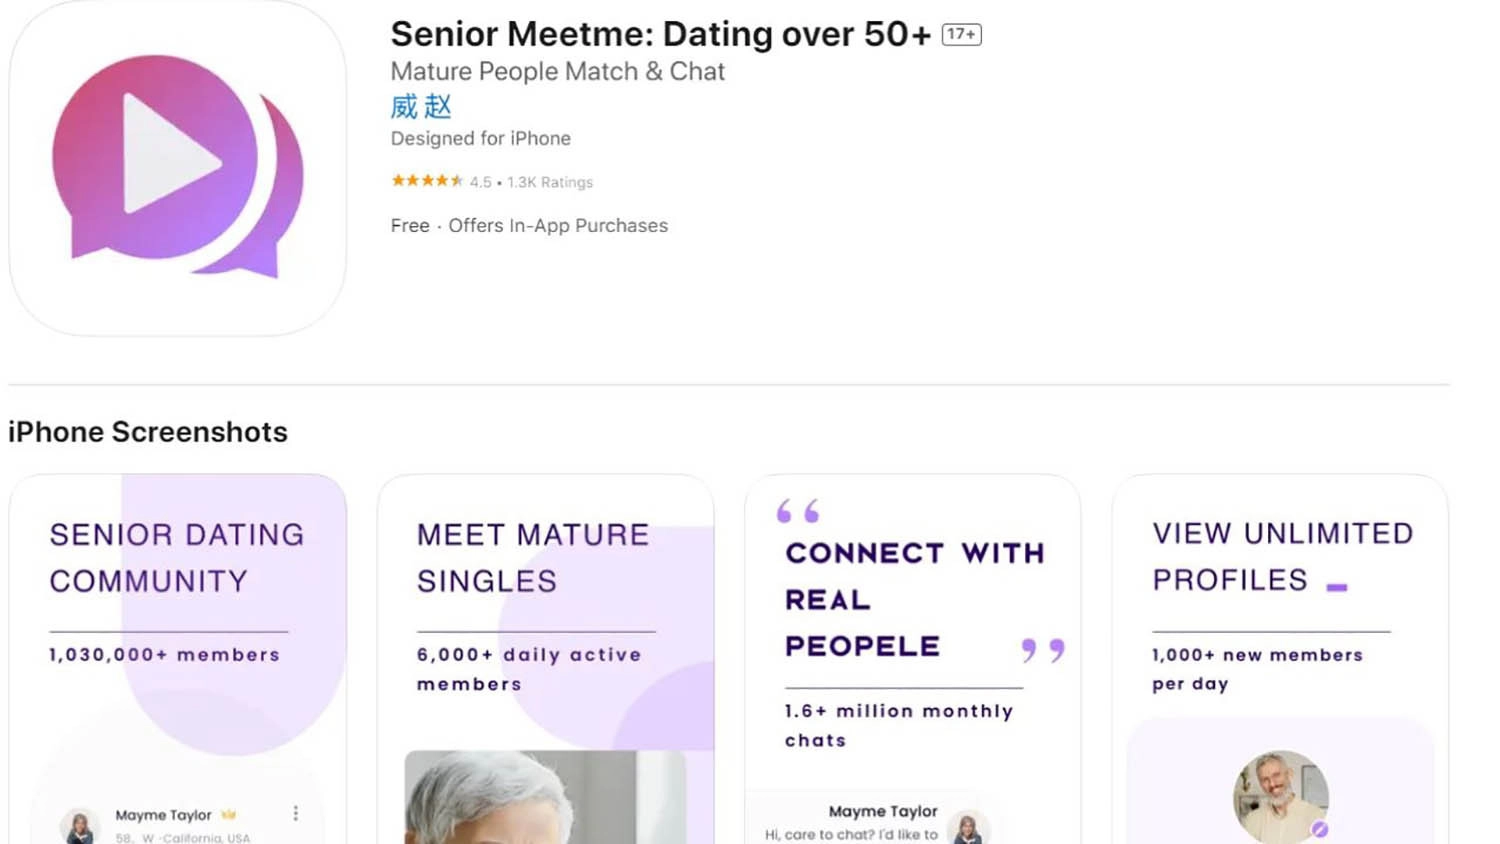 Senior Meetme: Dating over 50+